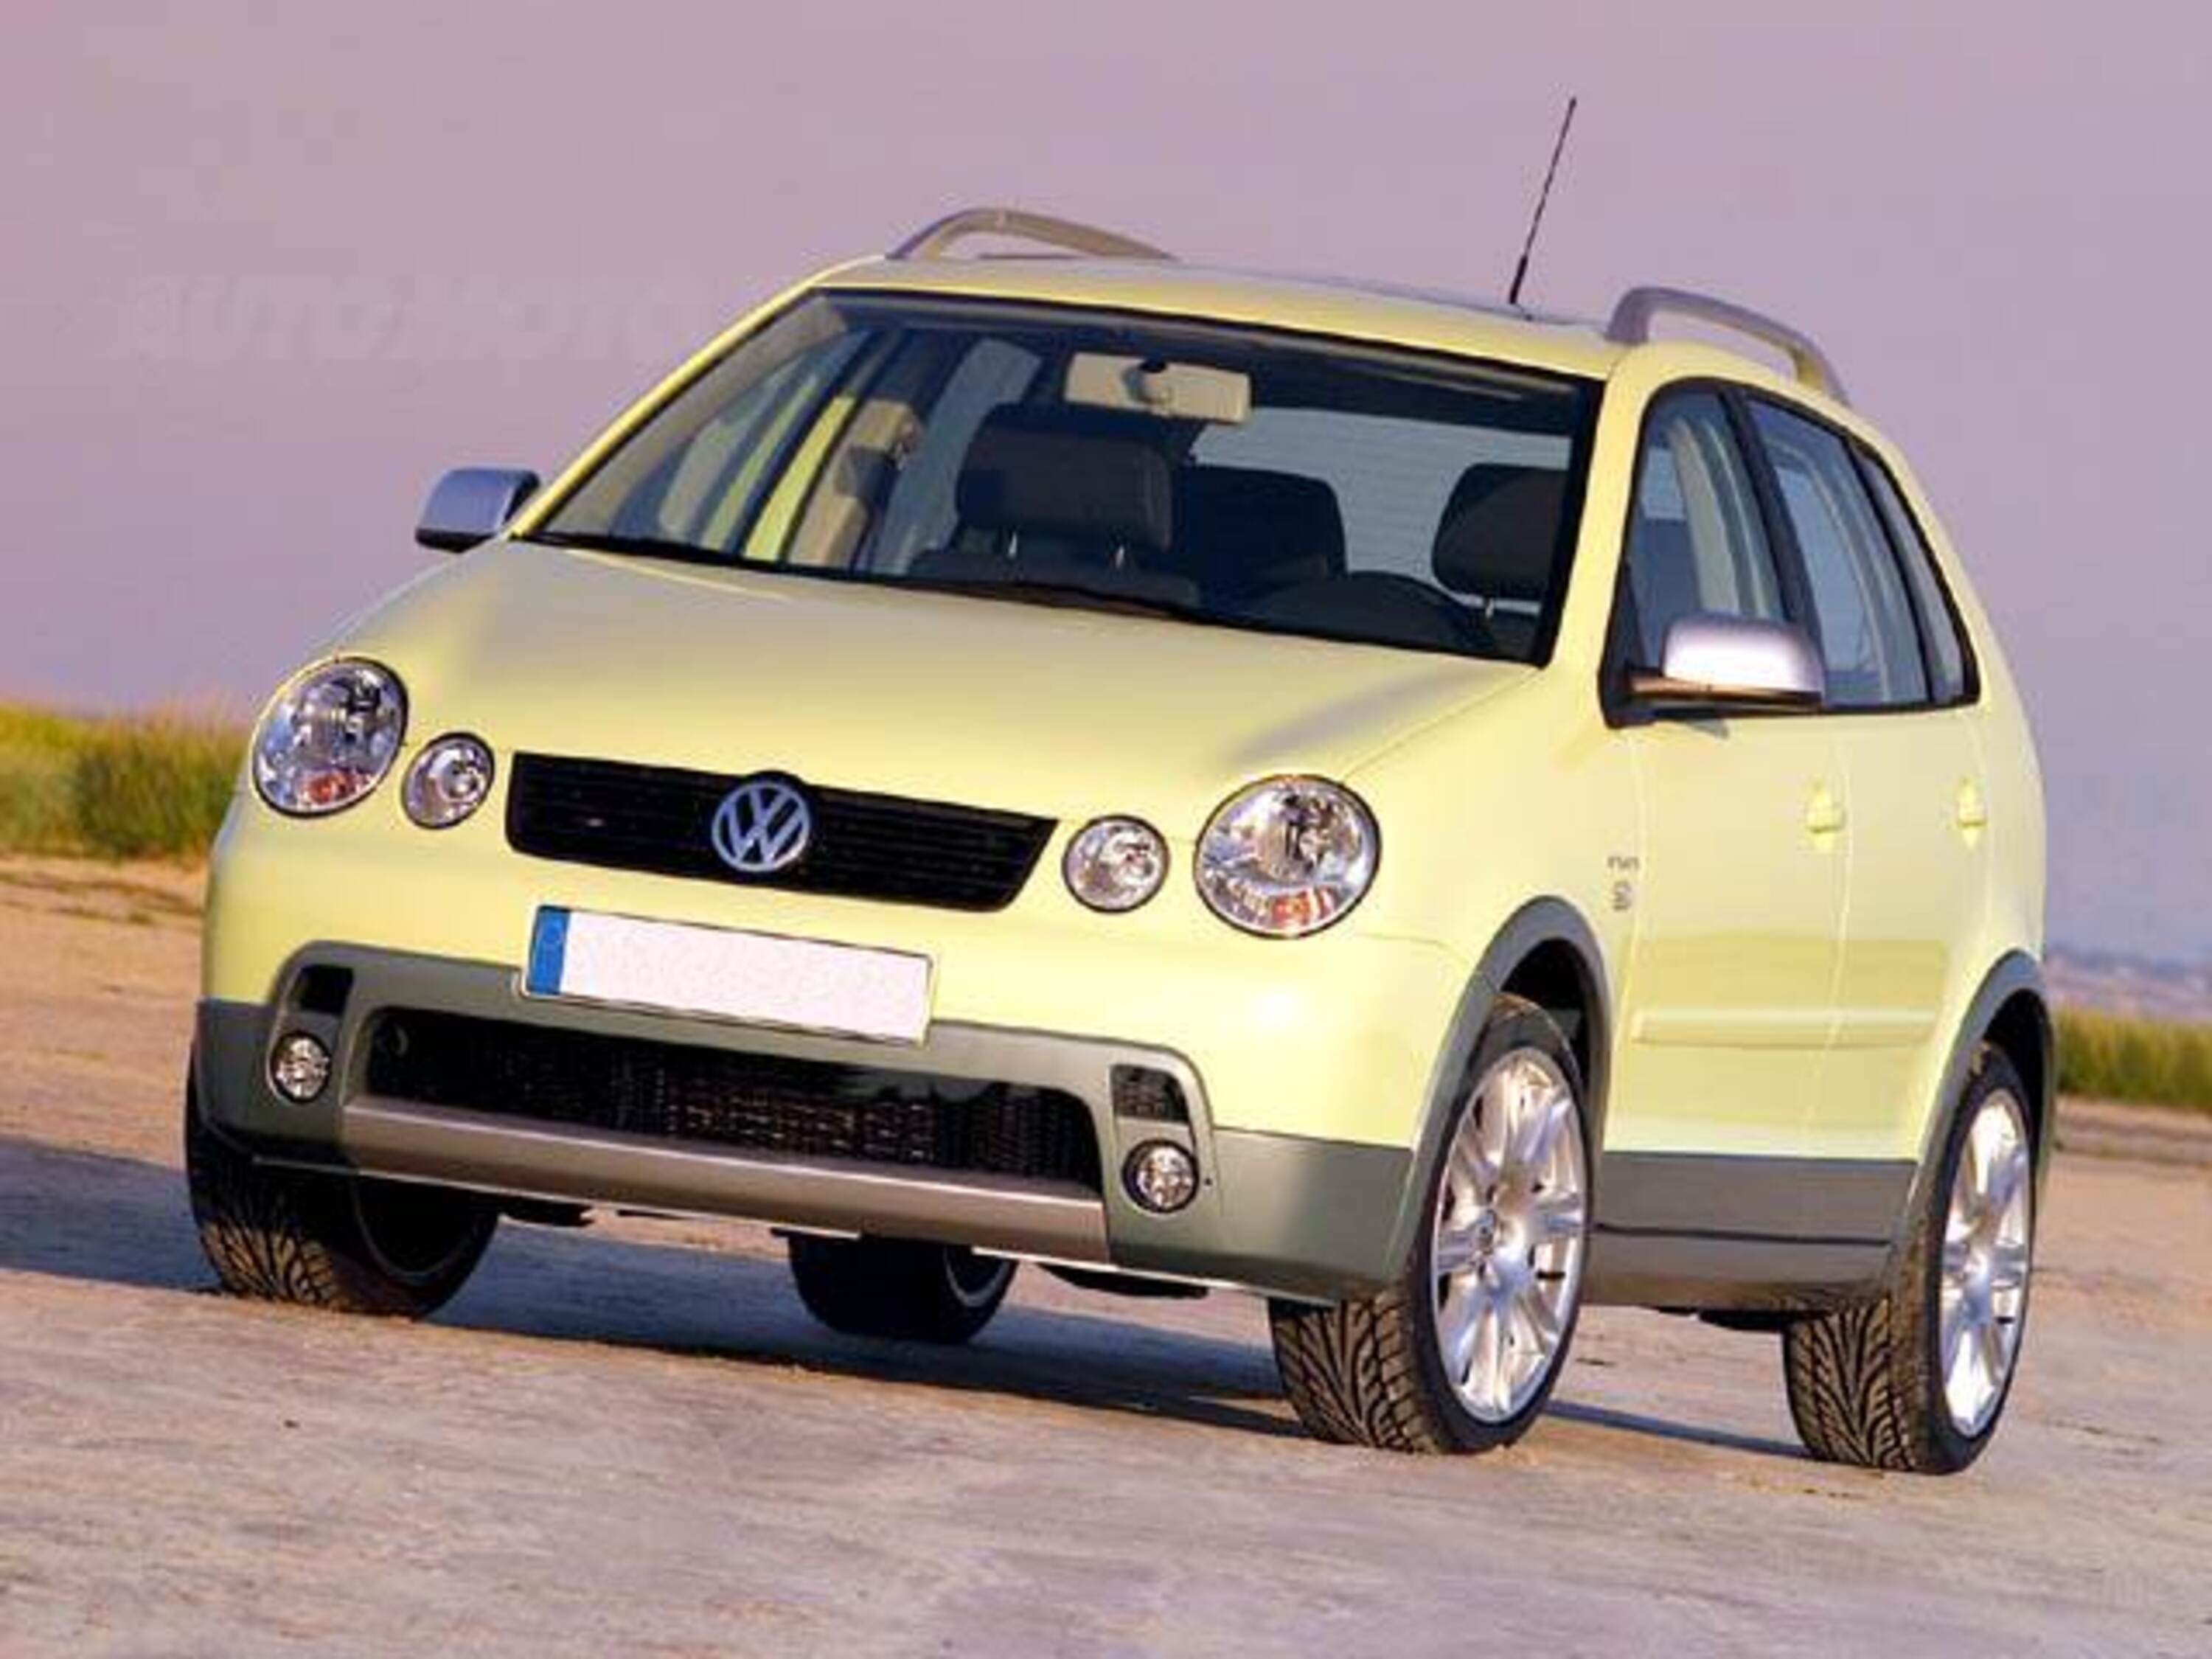 Volkswagen Polo Fun 1.4 TDI